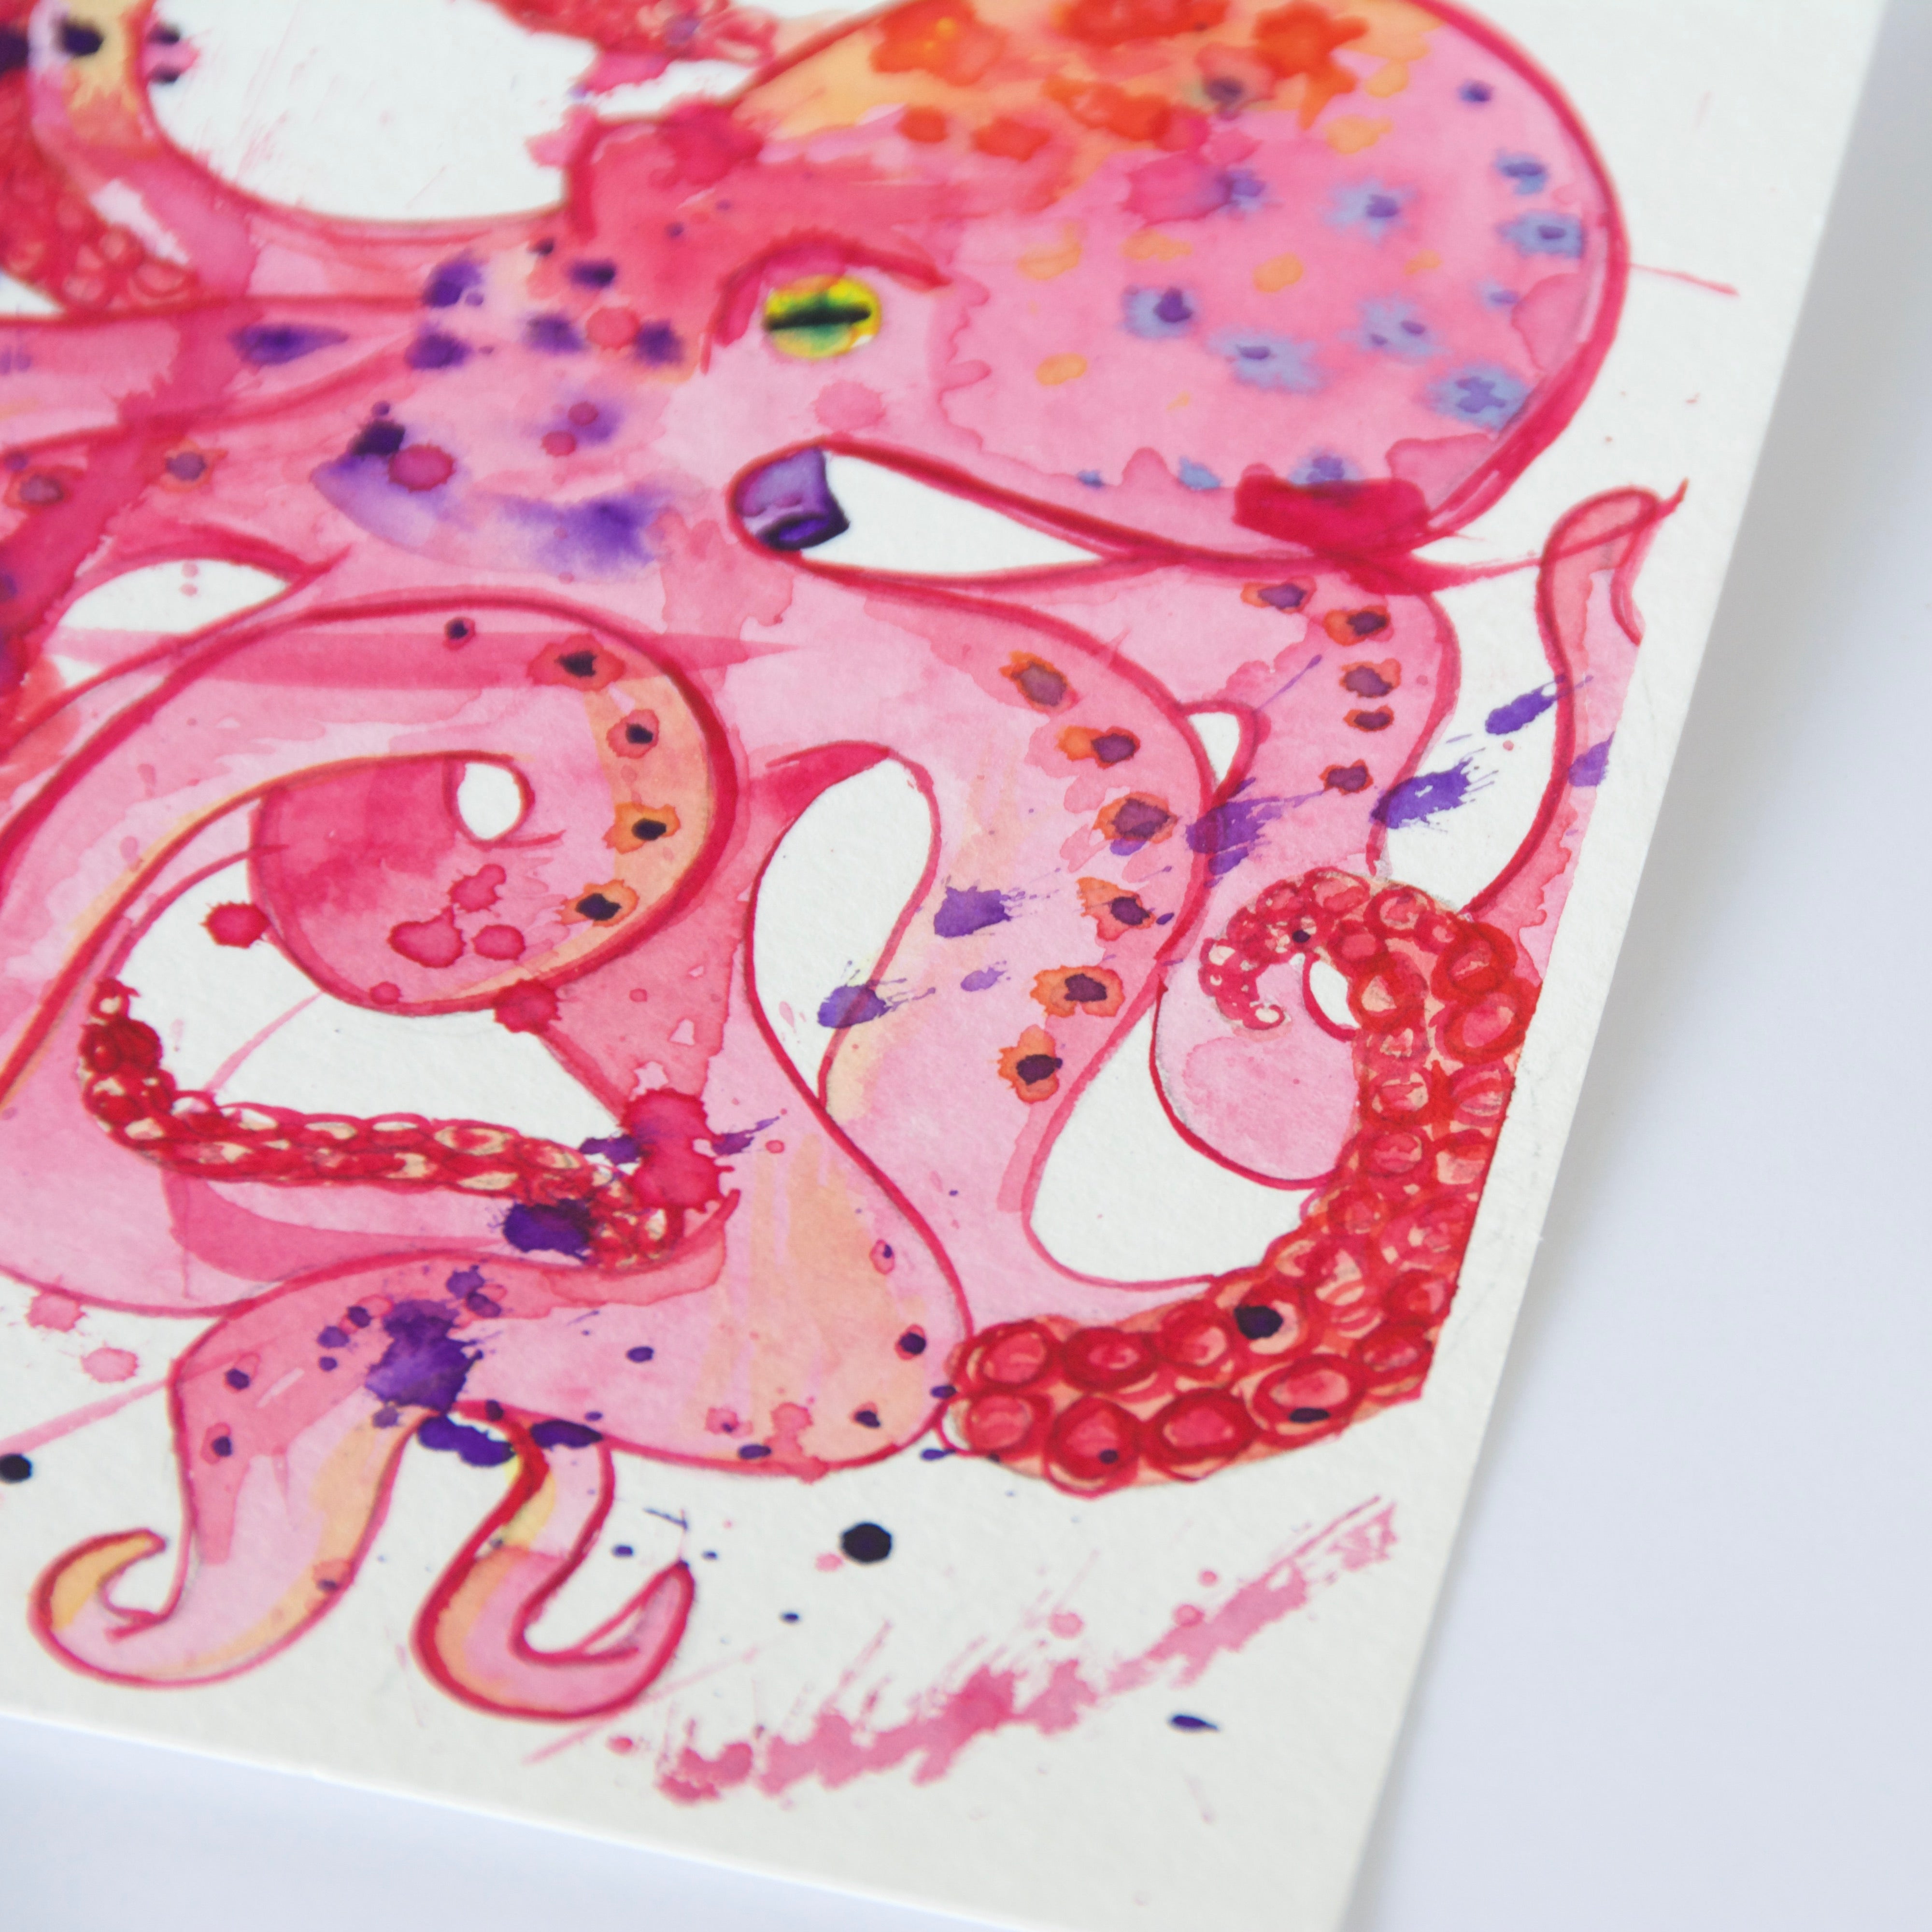 Pink Octopus, Orignal Watercolor Painting